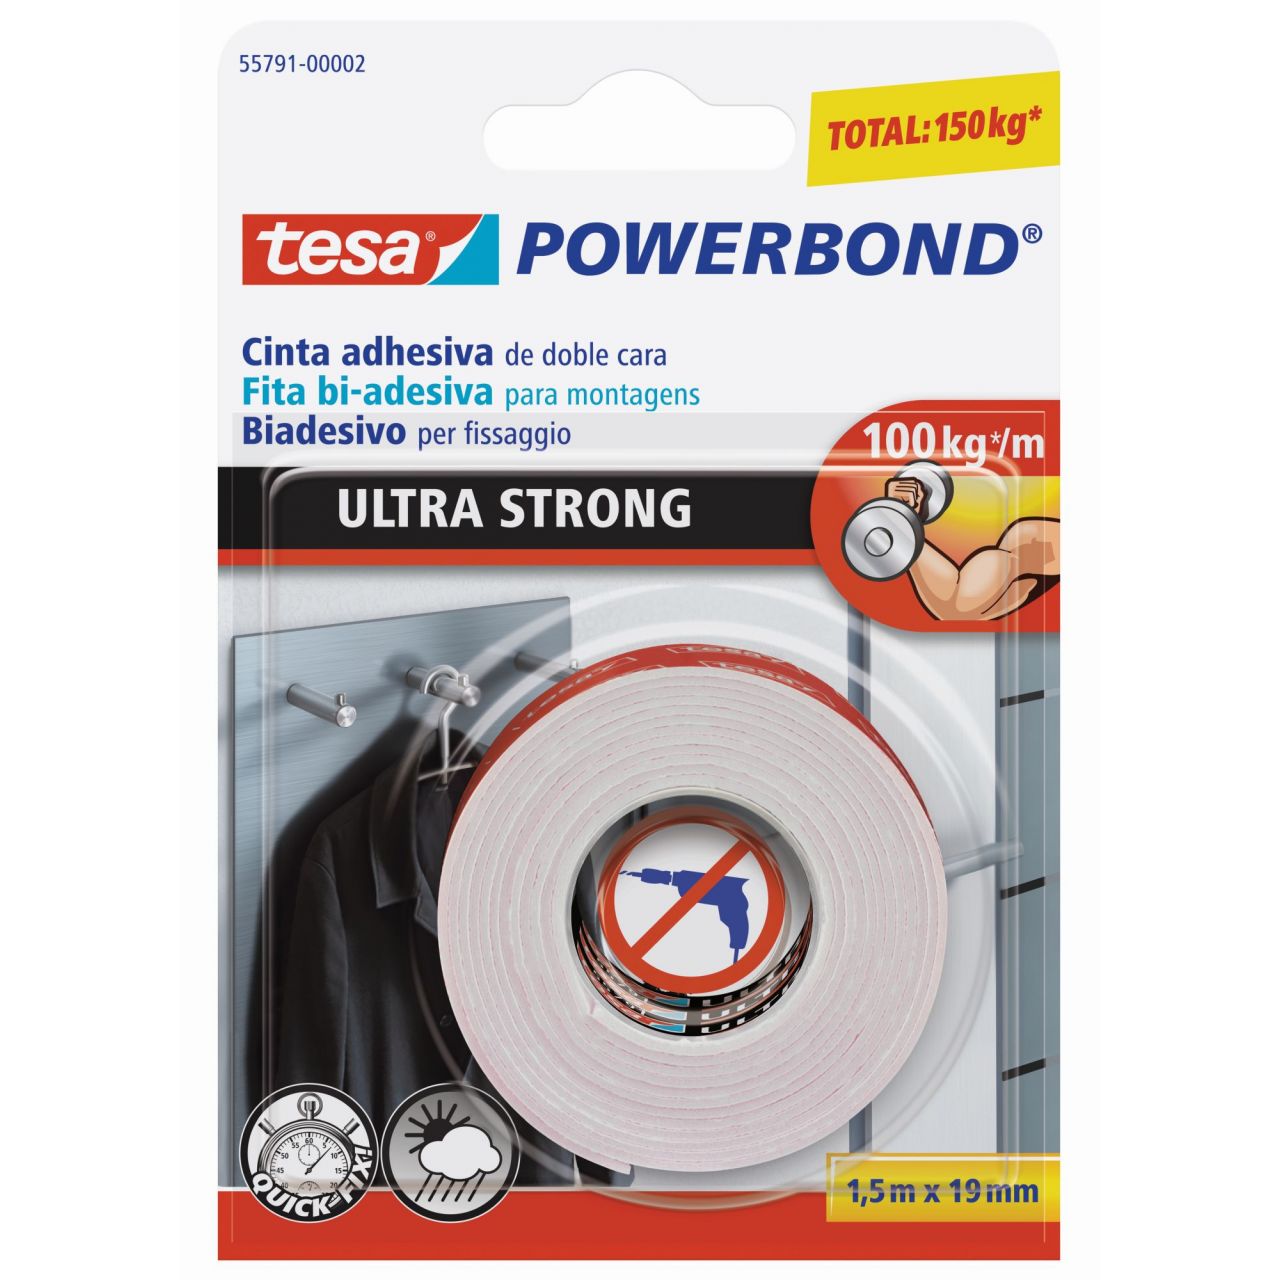 tesa Powerbond Ultrastrong Cinta 1,5m x 19mm